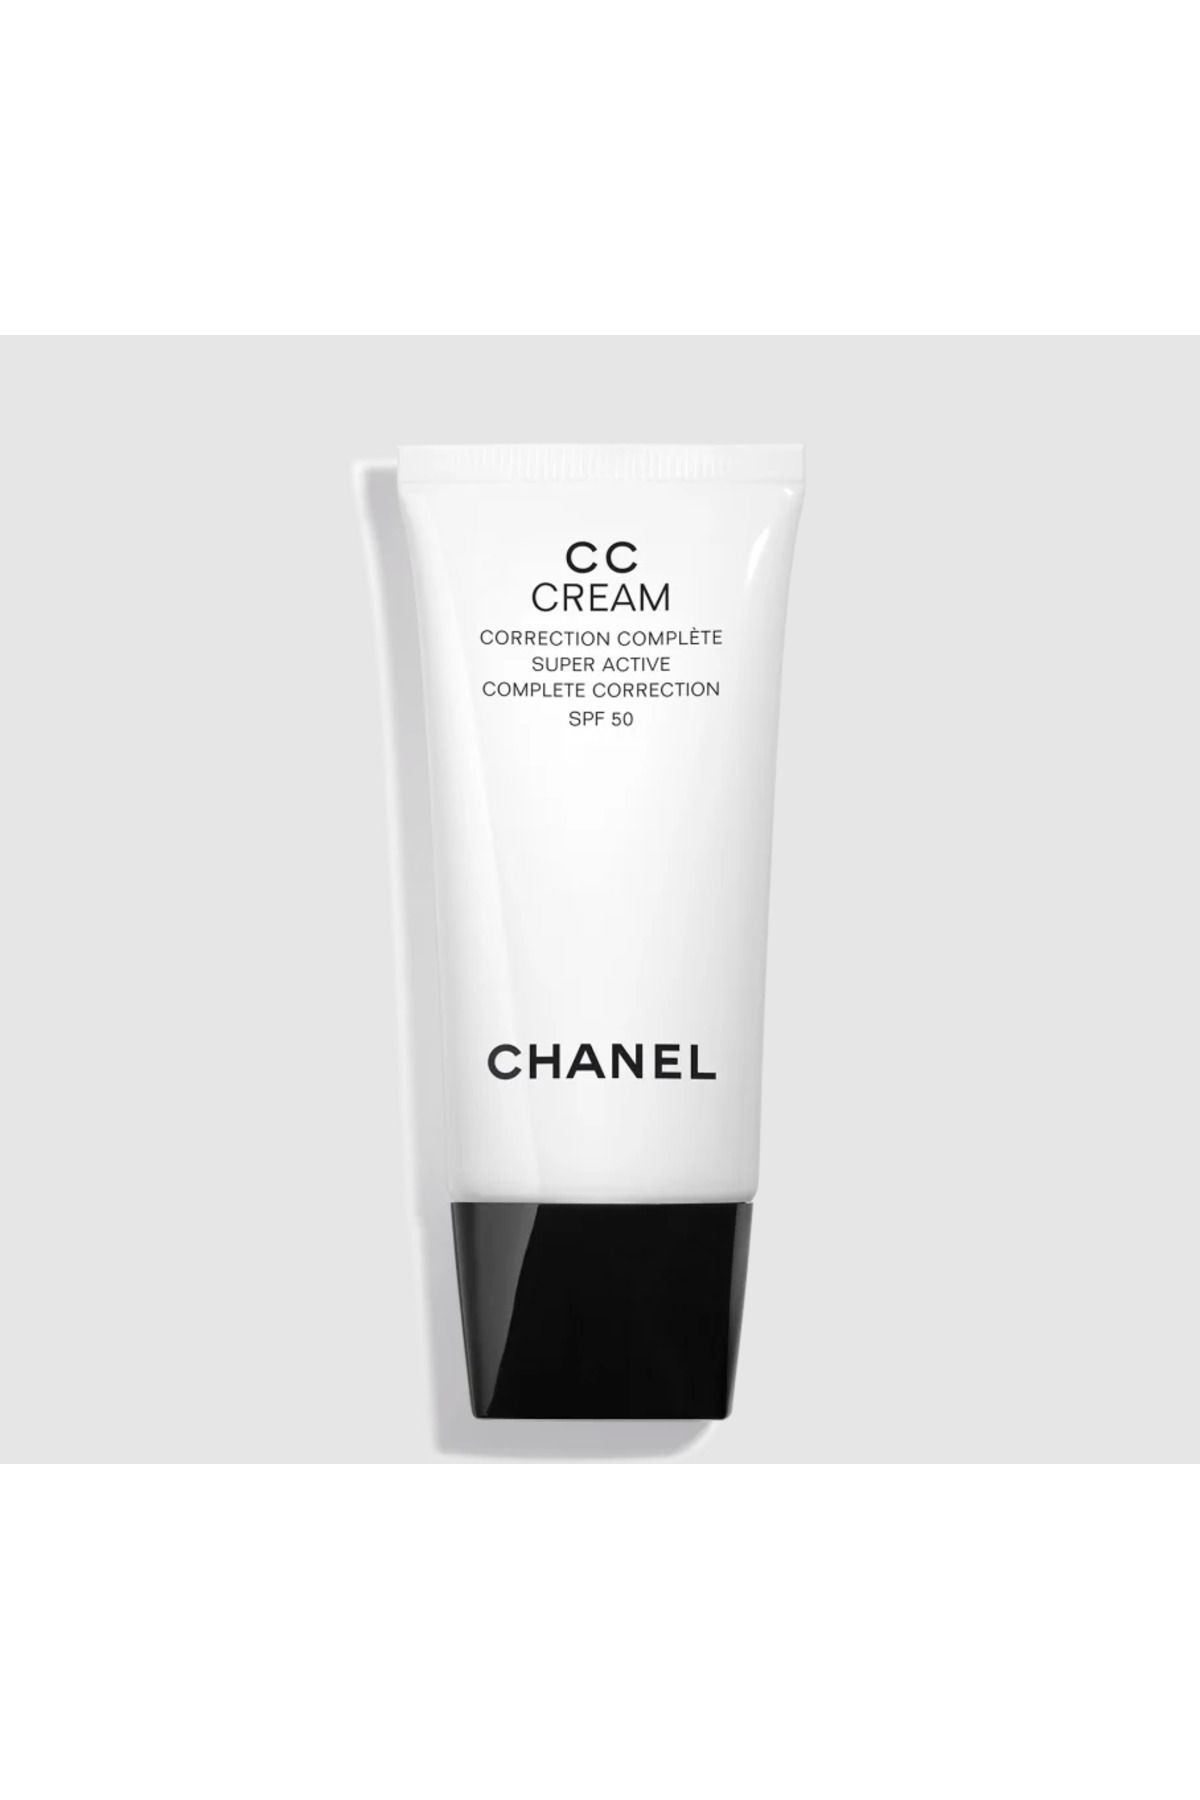 Chanel CC CREAM Süper Aktif Komple Düzeltme SPF 50 30 ml